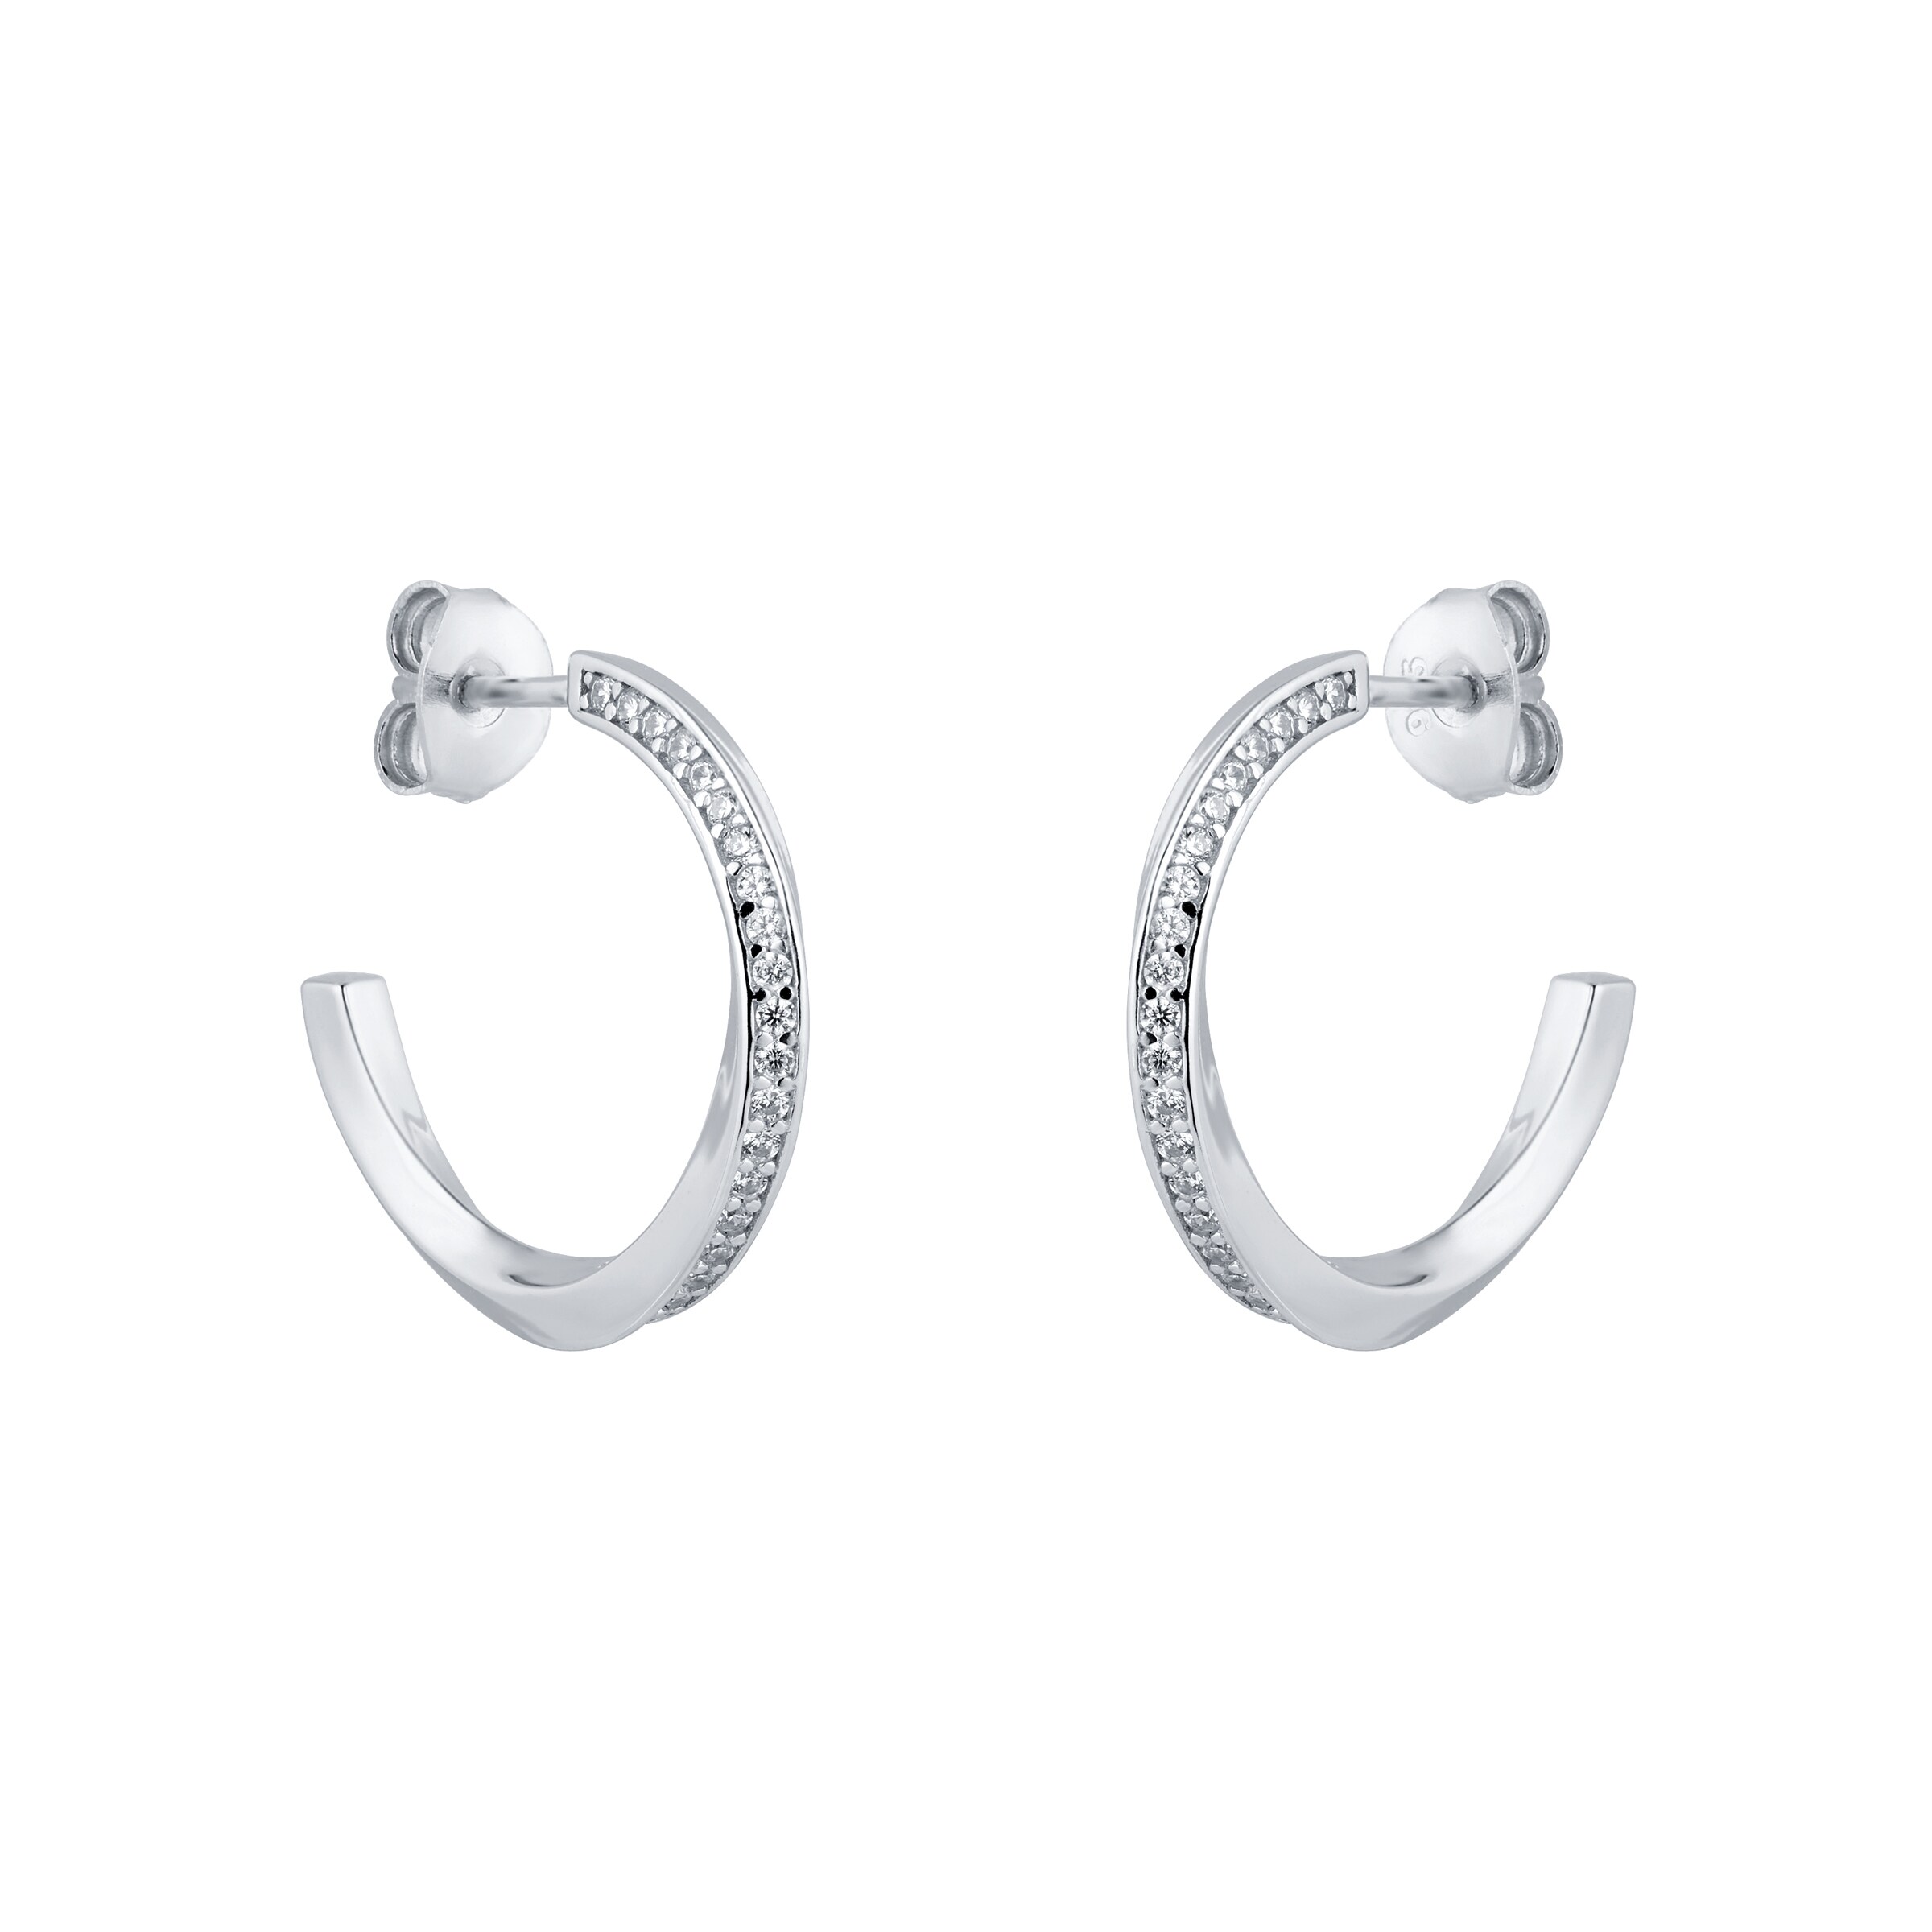 Silver Twisted Pave Cubic Zirconia Hoop Earrings